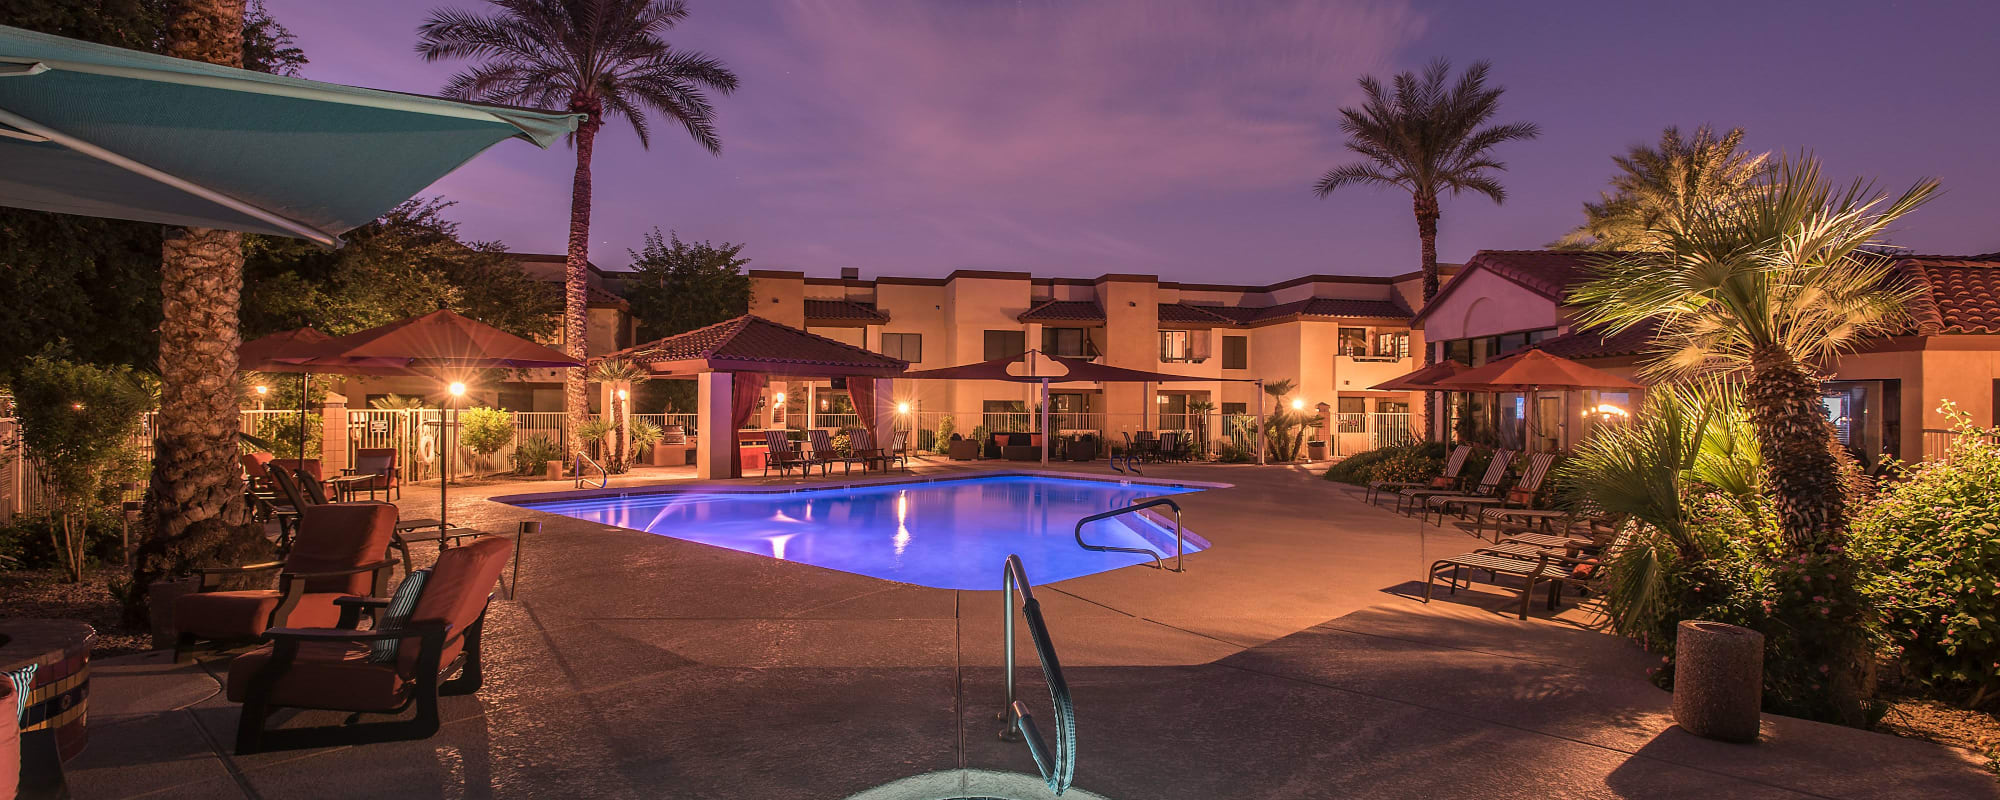 Contact us at Scottsdale Highlands Apartments in Scottsdale, Arizona